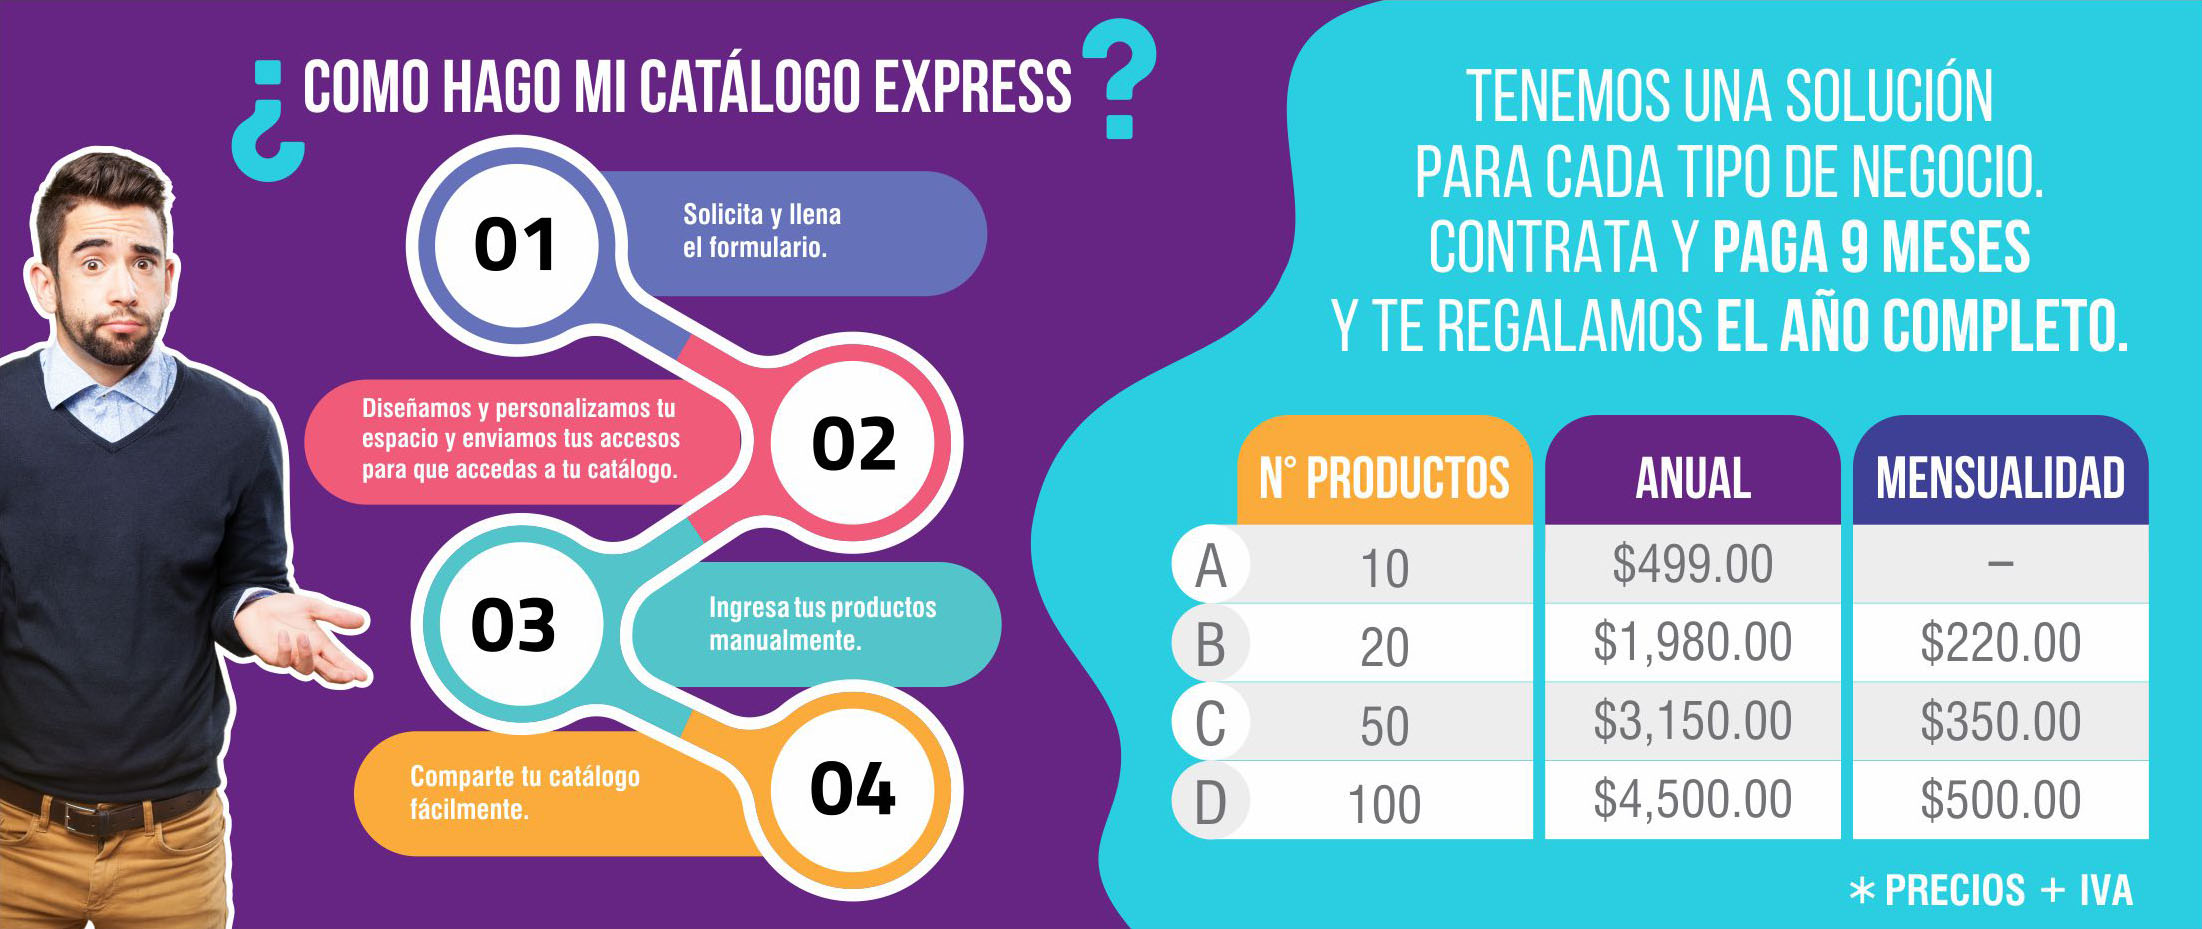 catalogo express